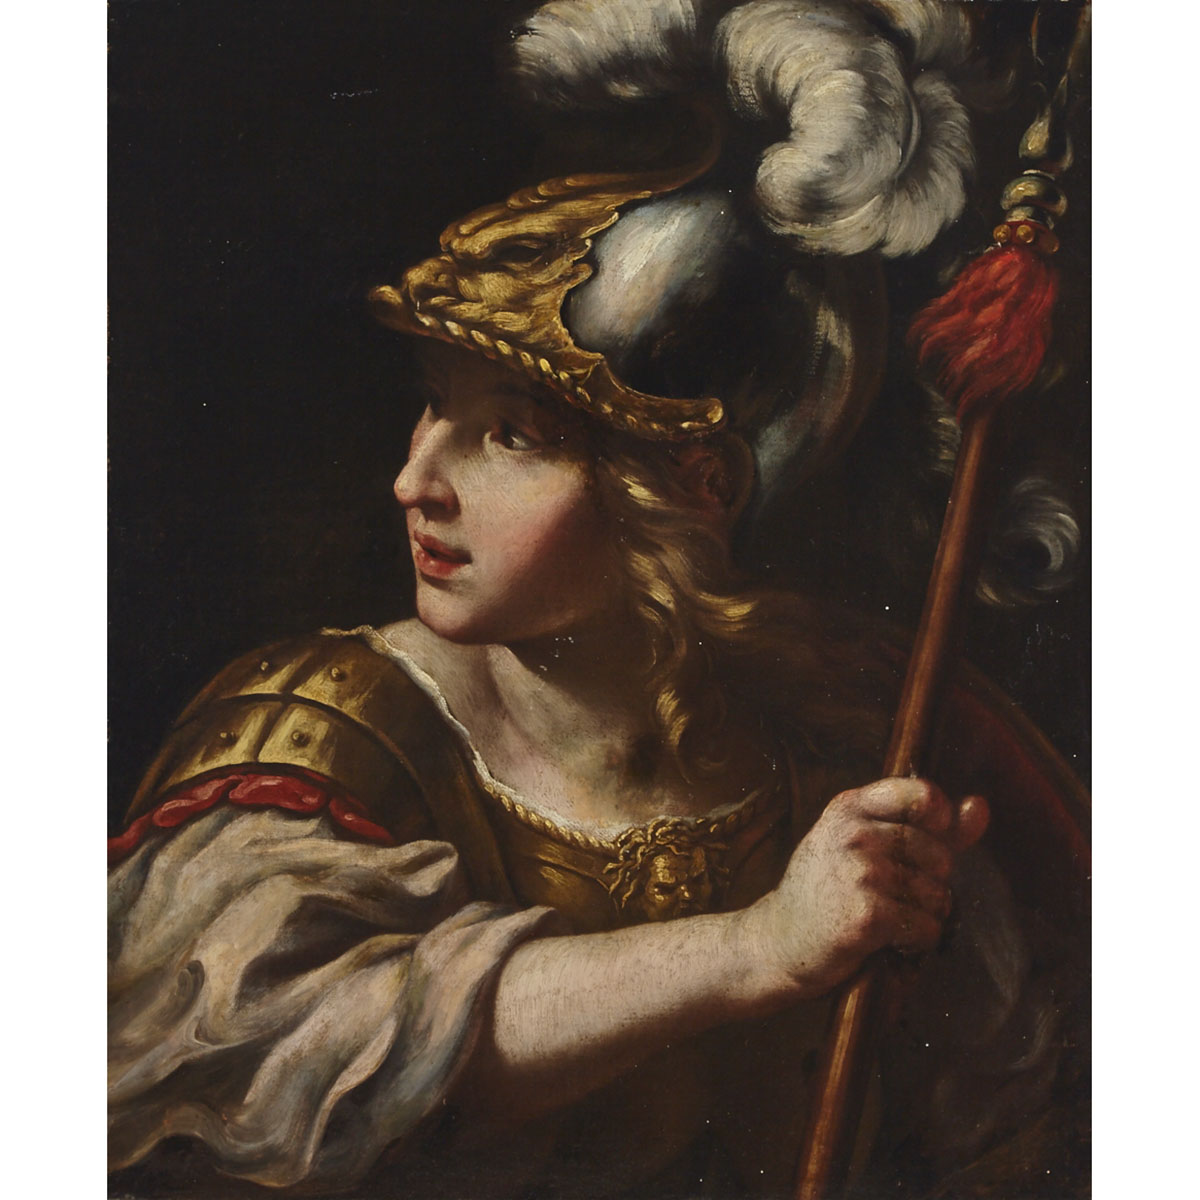 Follower of Sir Peter Paul Rubens (1577-1640)